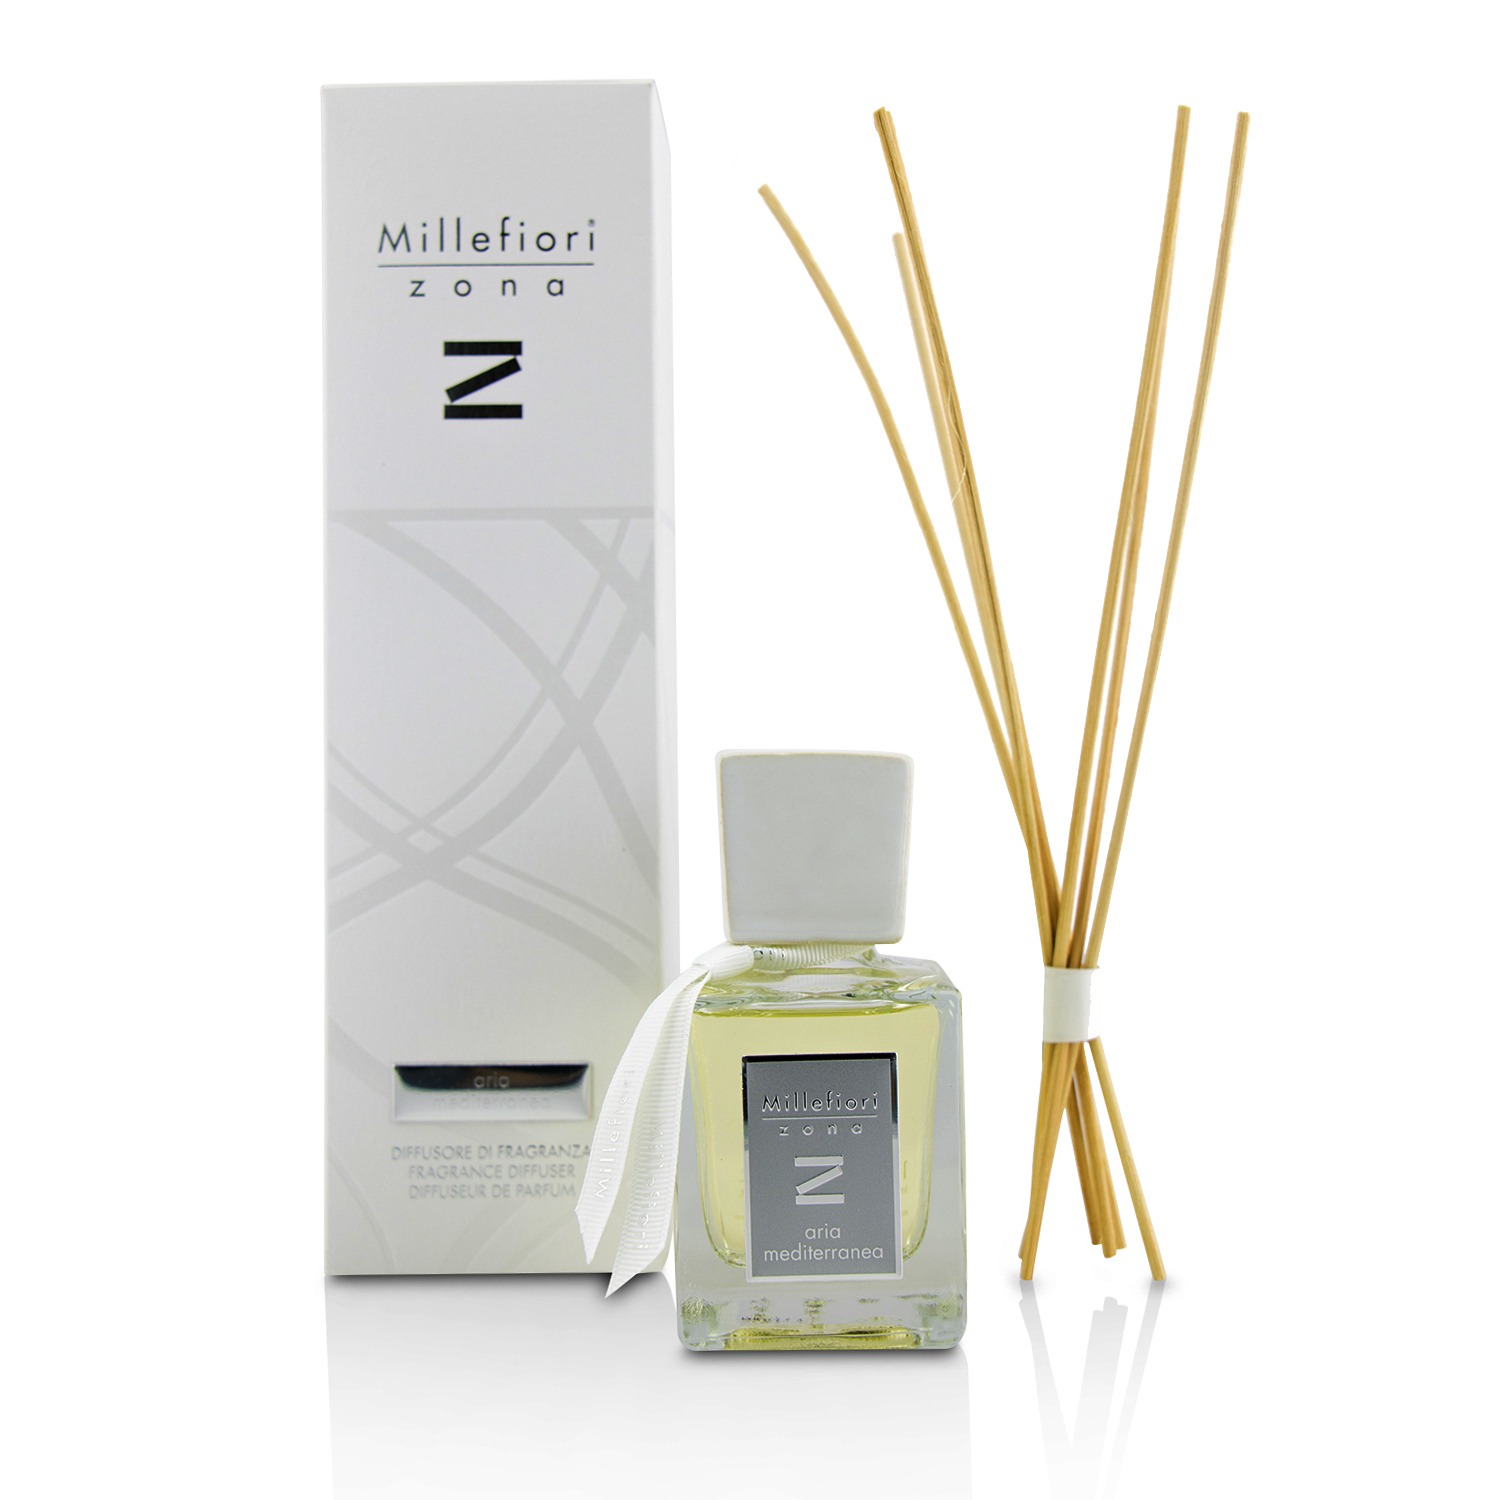 Zona Fragrance Diffuser - Aria Mediterranea (New Packaging) Millefiori Image